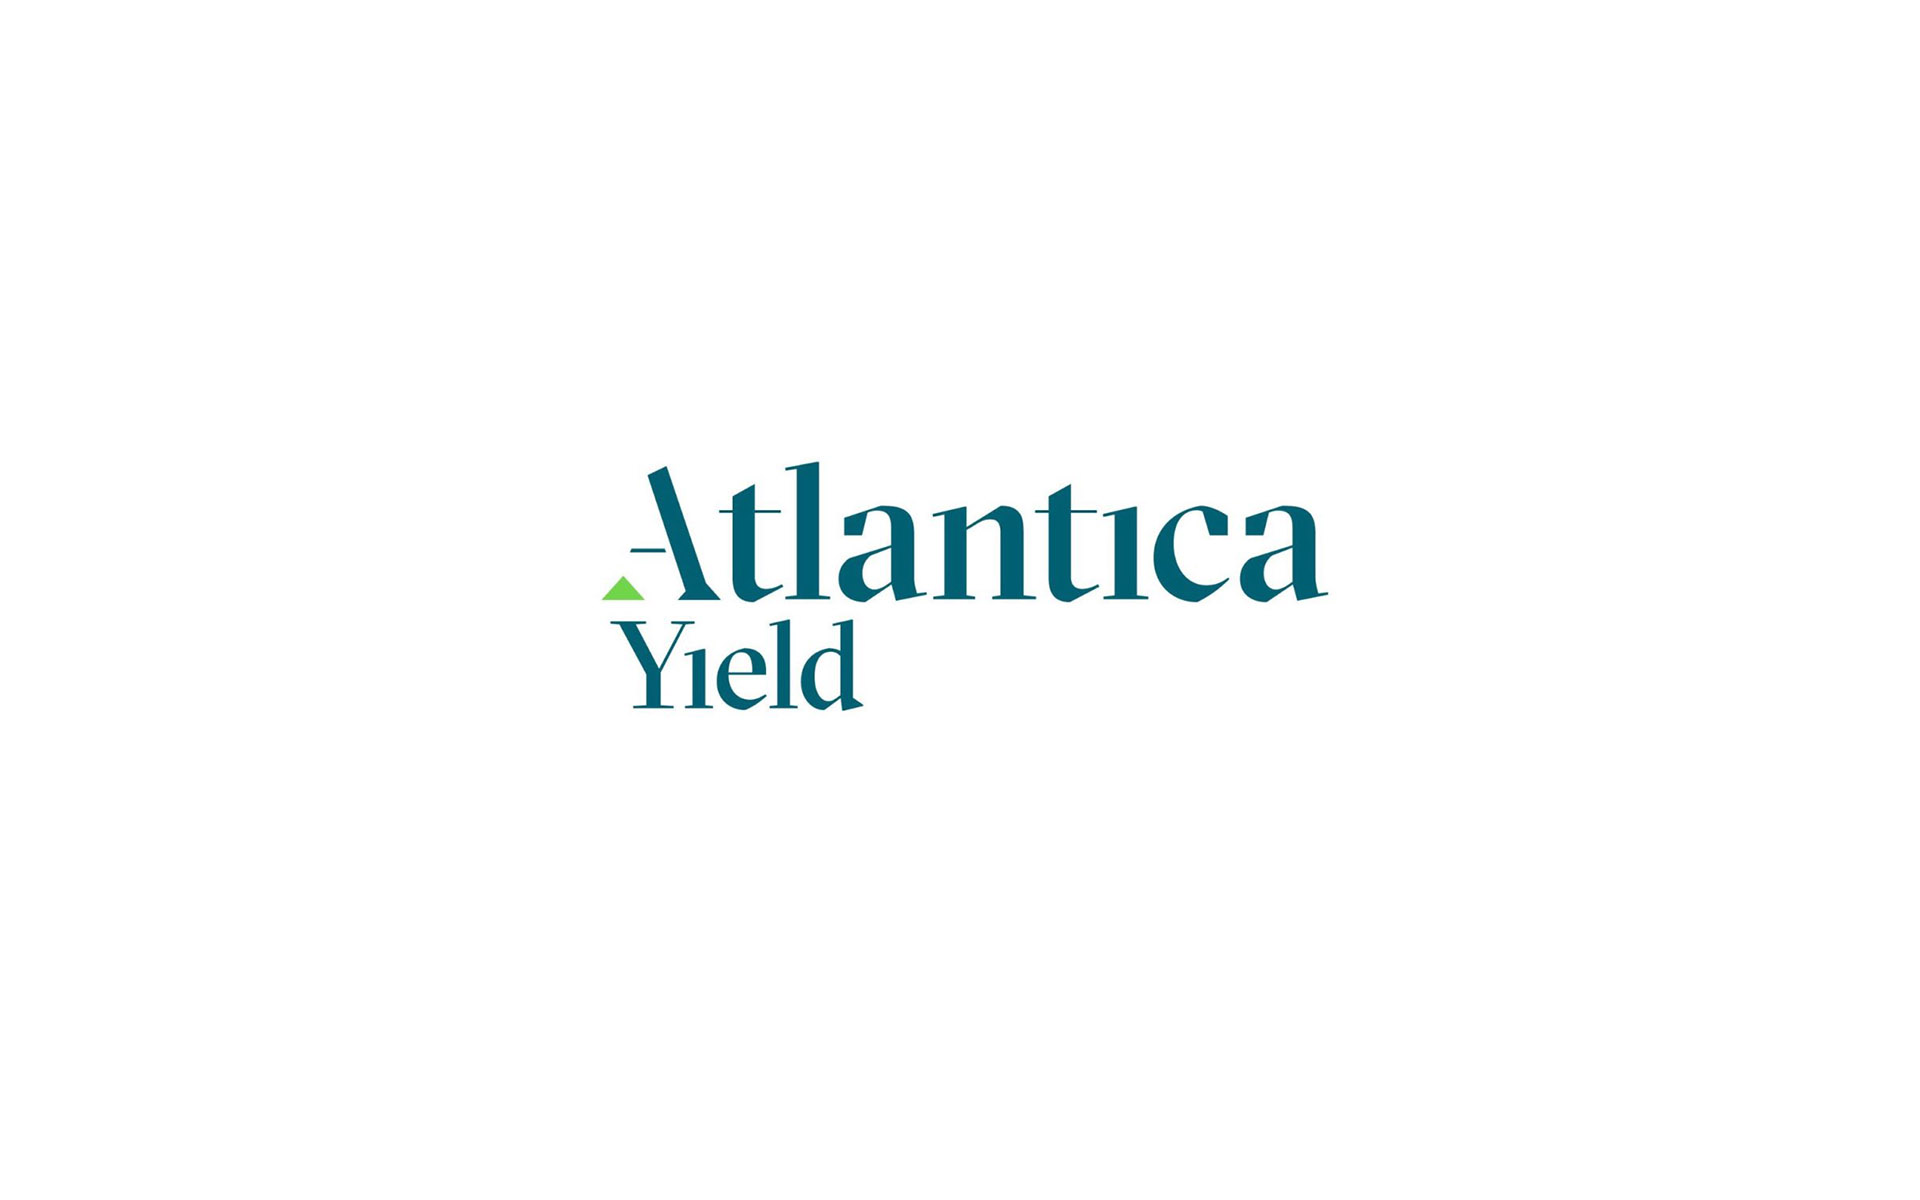 Atlantica yield